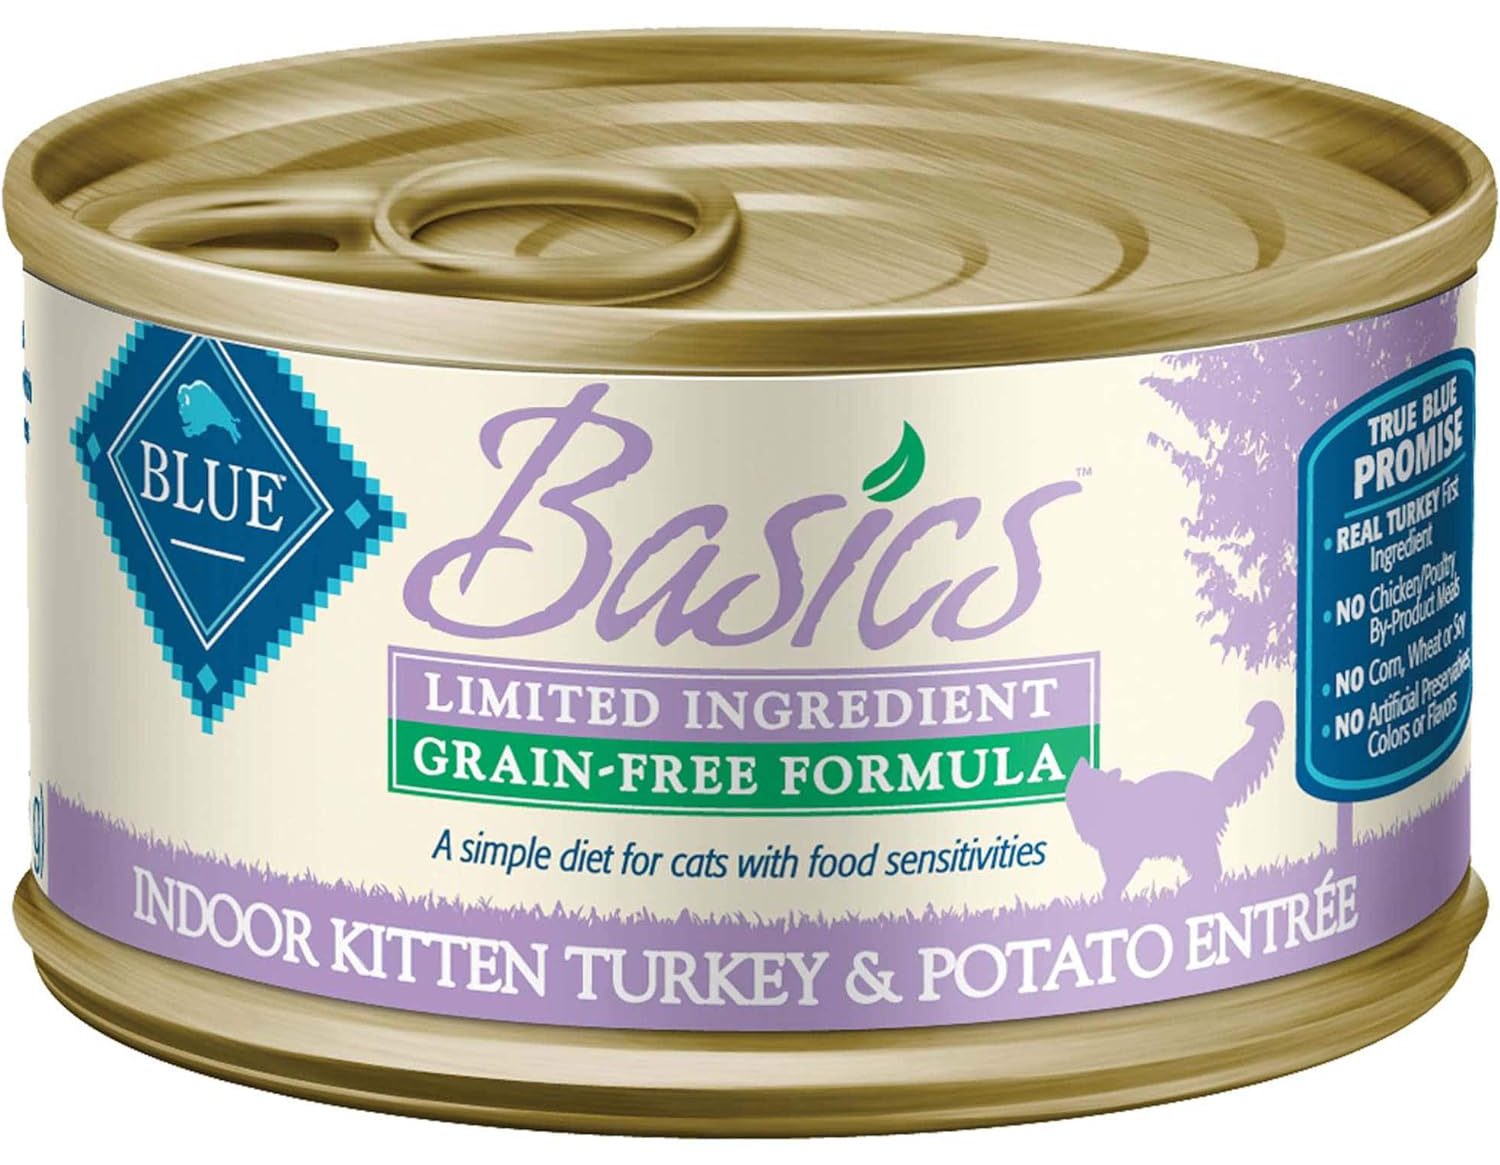 Blue Buffalo Basics LID Turkey & Potato Canned Kitten Food